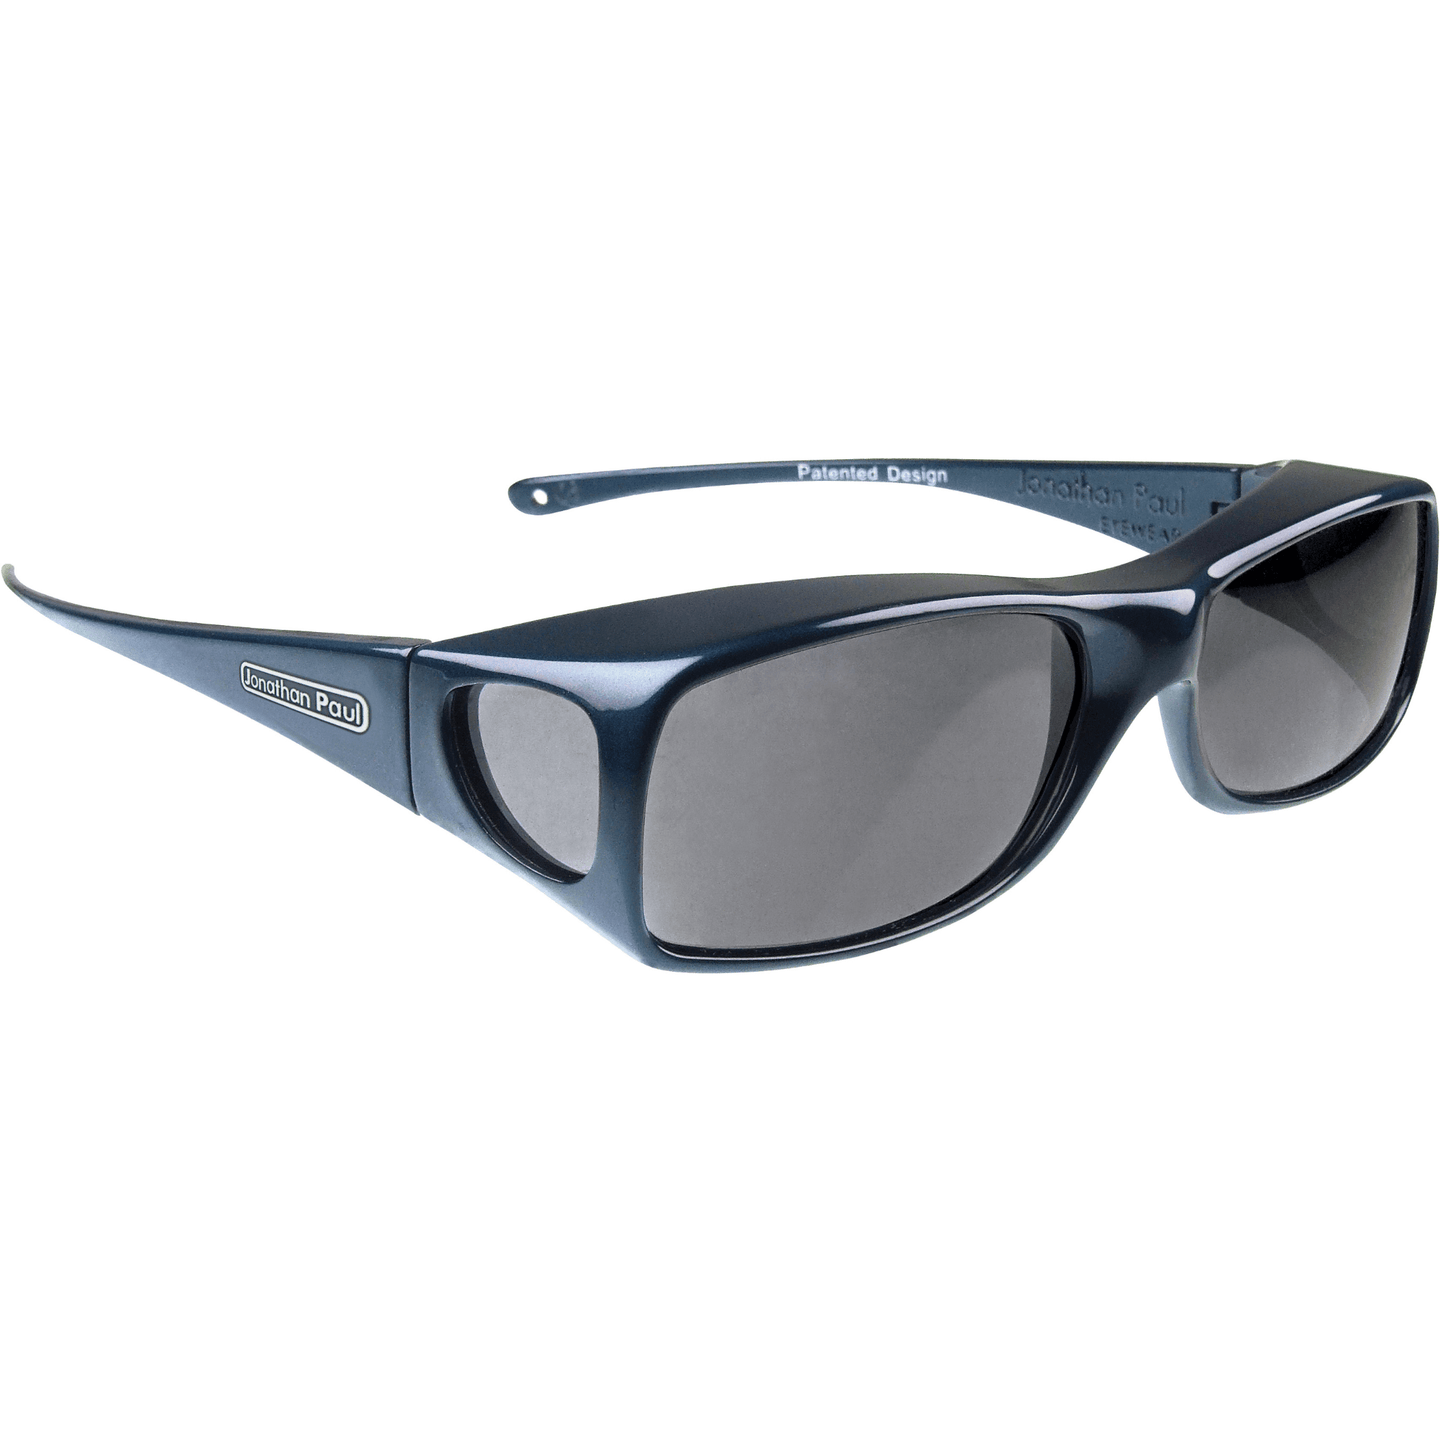 Fitover Sunglasses 'Aria' Neptune - Grey Lens